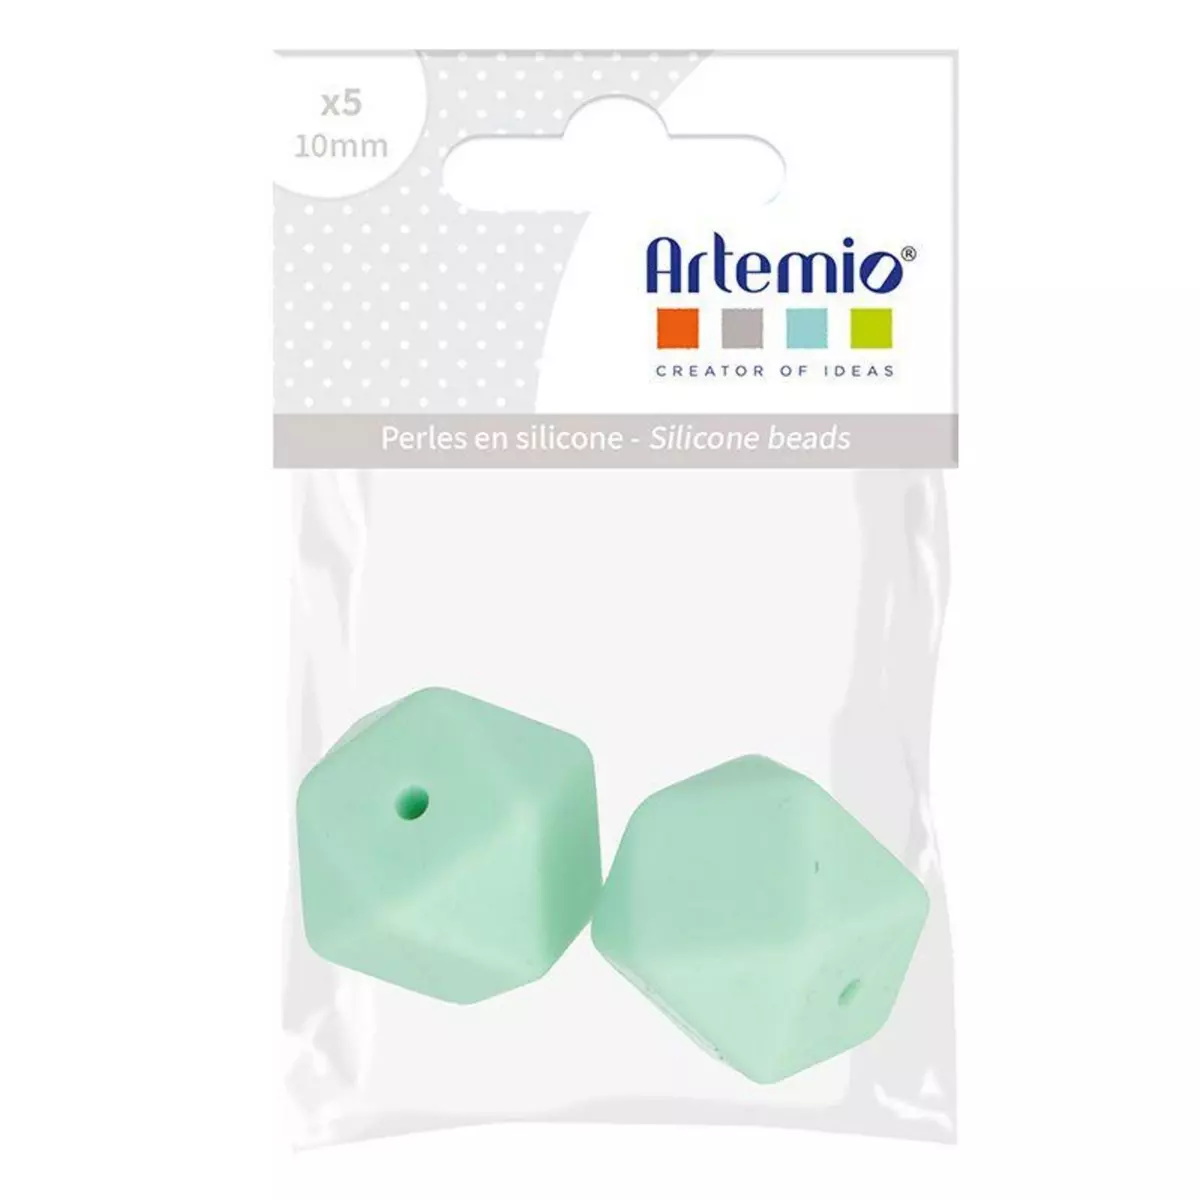 Artemio 2 perles silicone hexagonales - 17 mm - vert d'eau